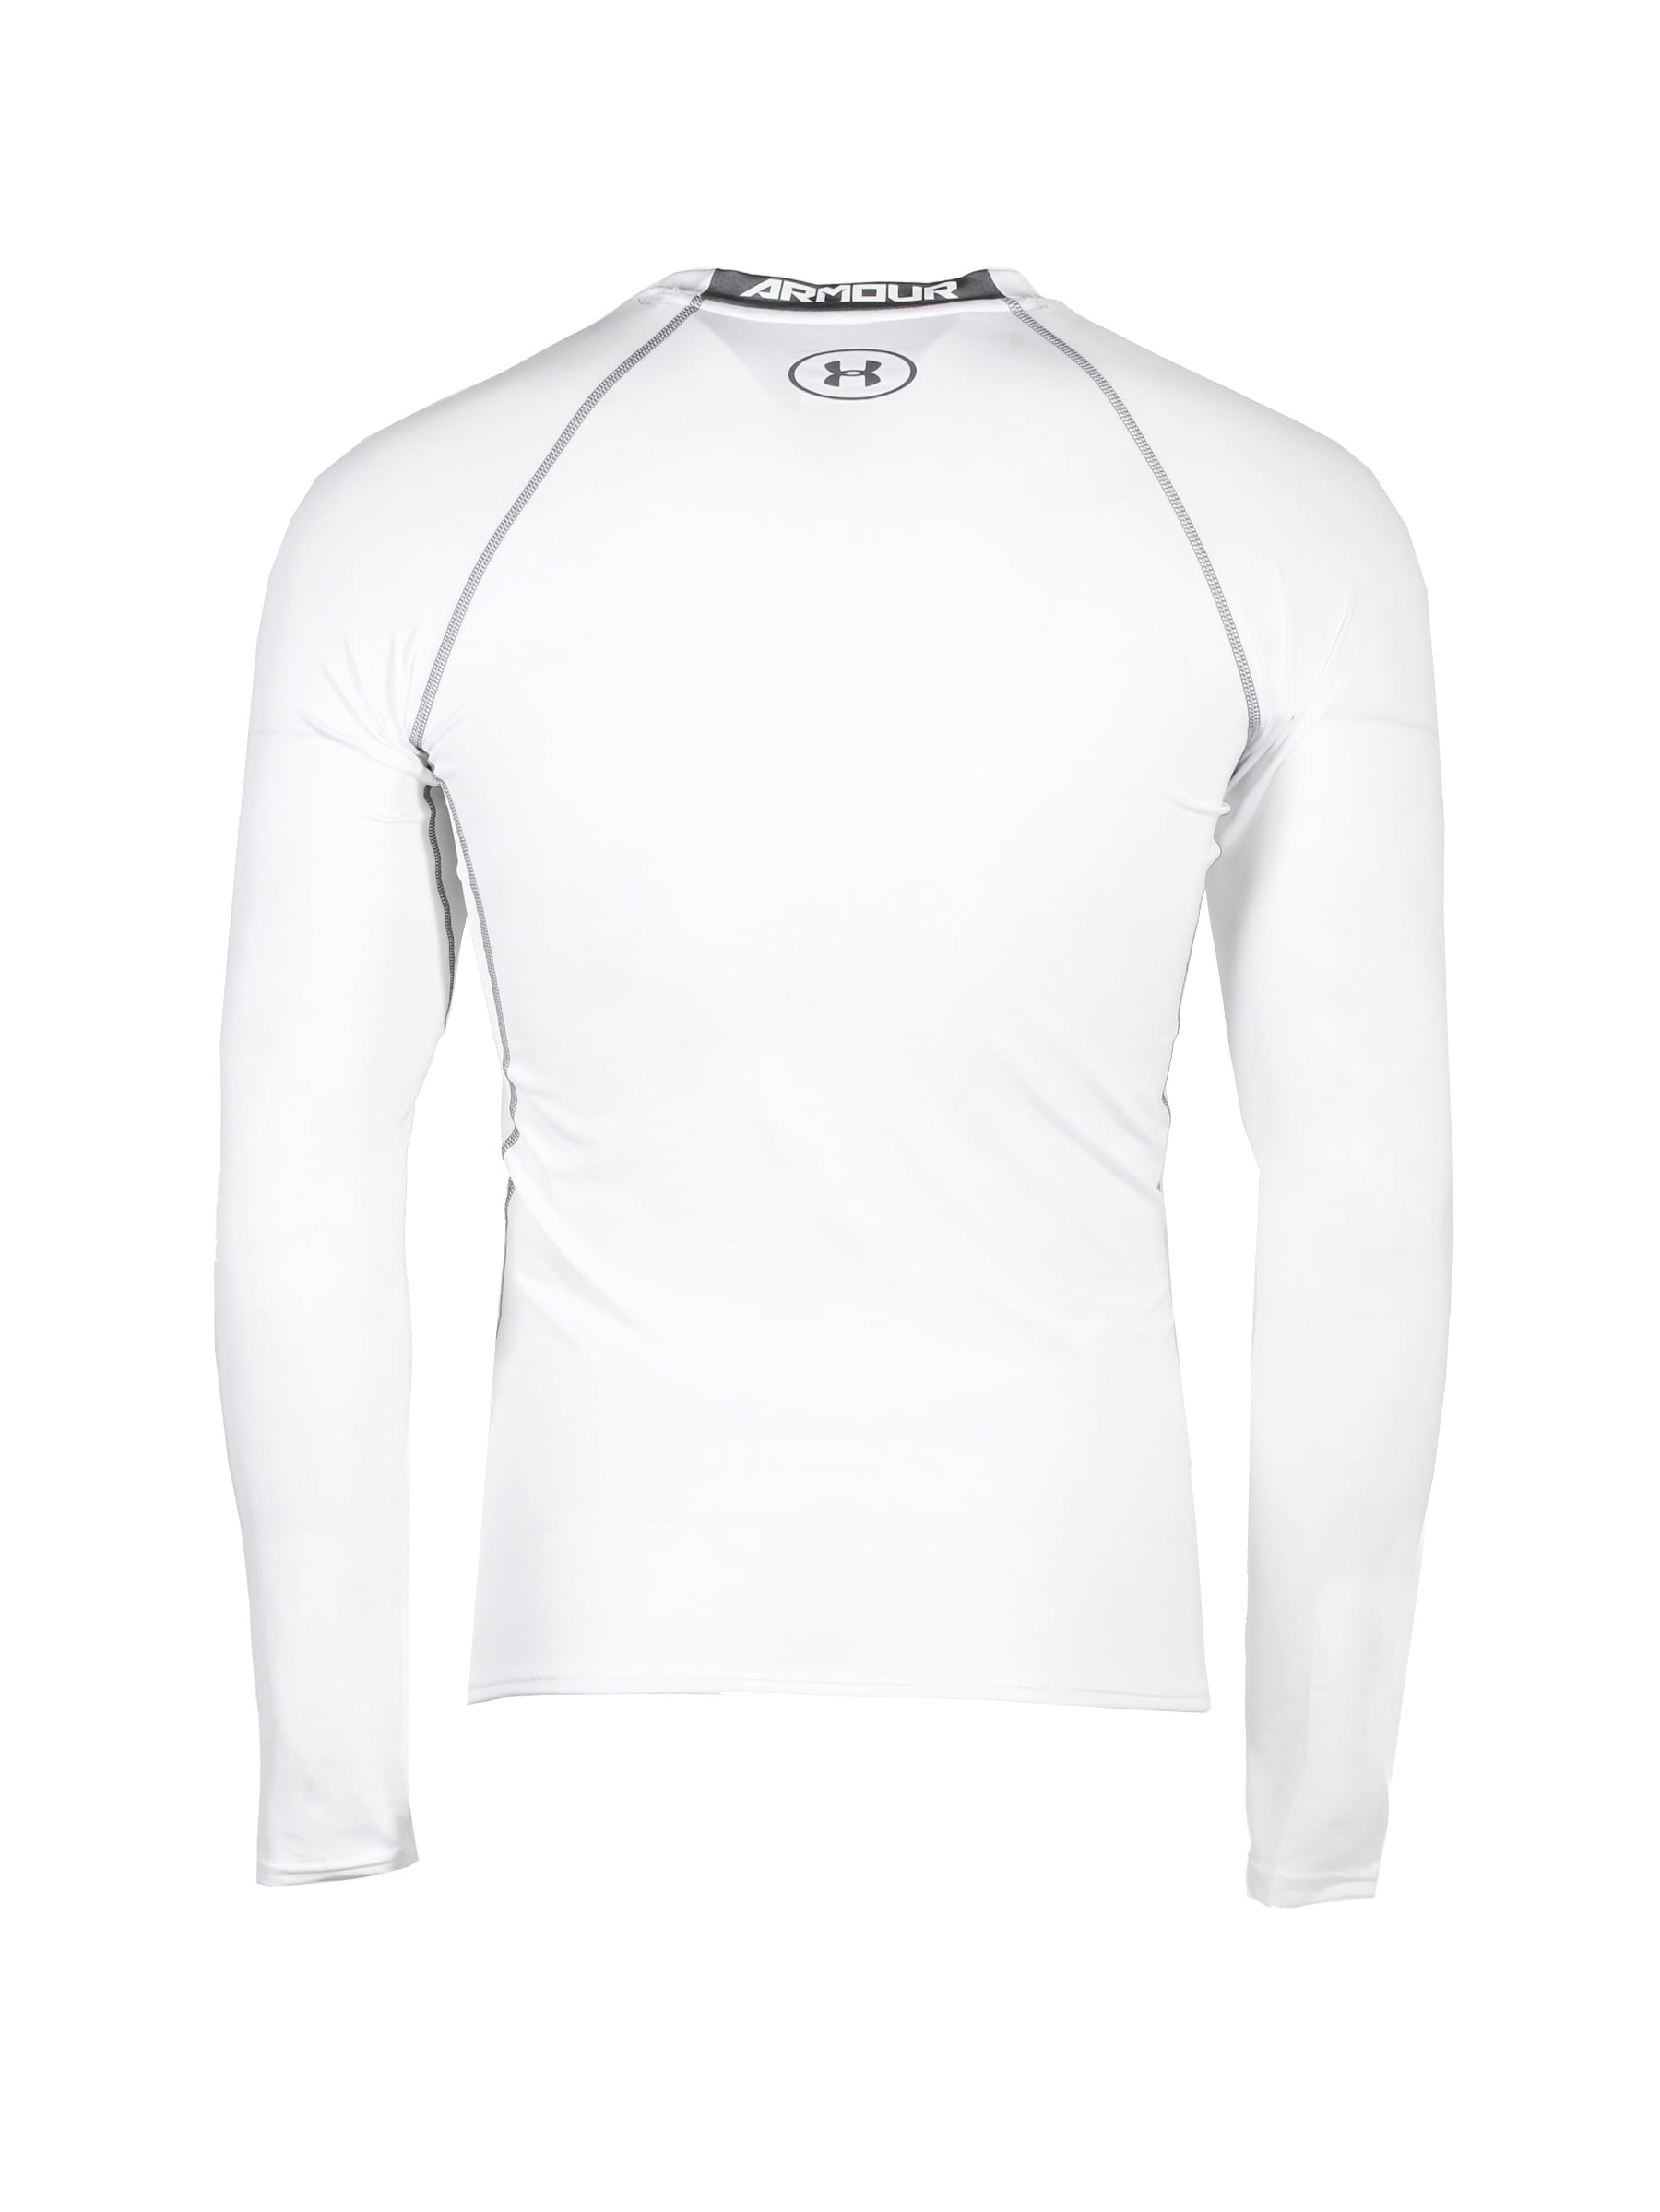 Under Armour HG Armour Comp Ισοθερμικό Shirt (White)-1361524-100